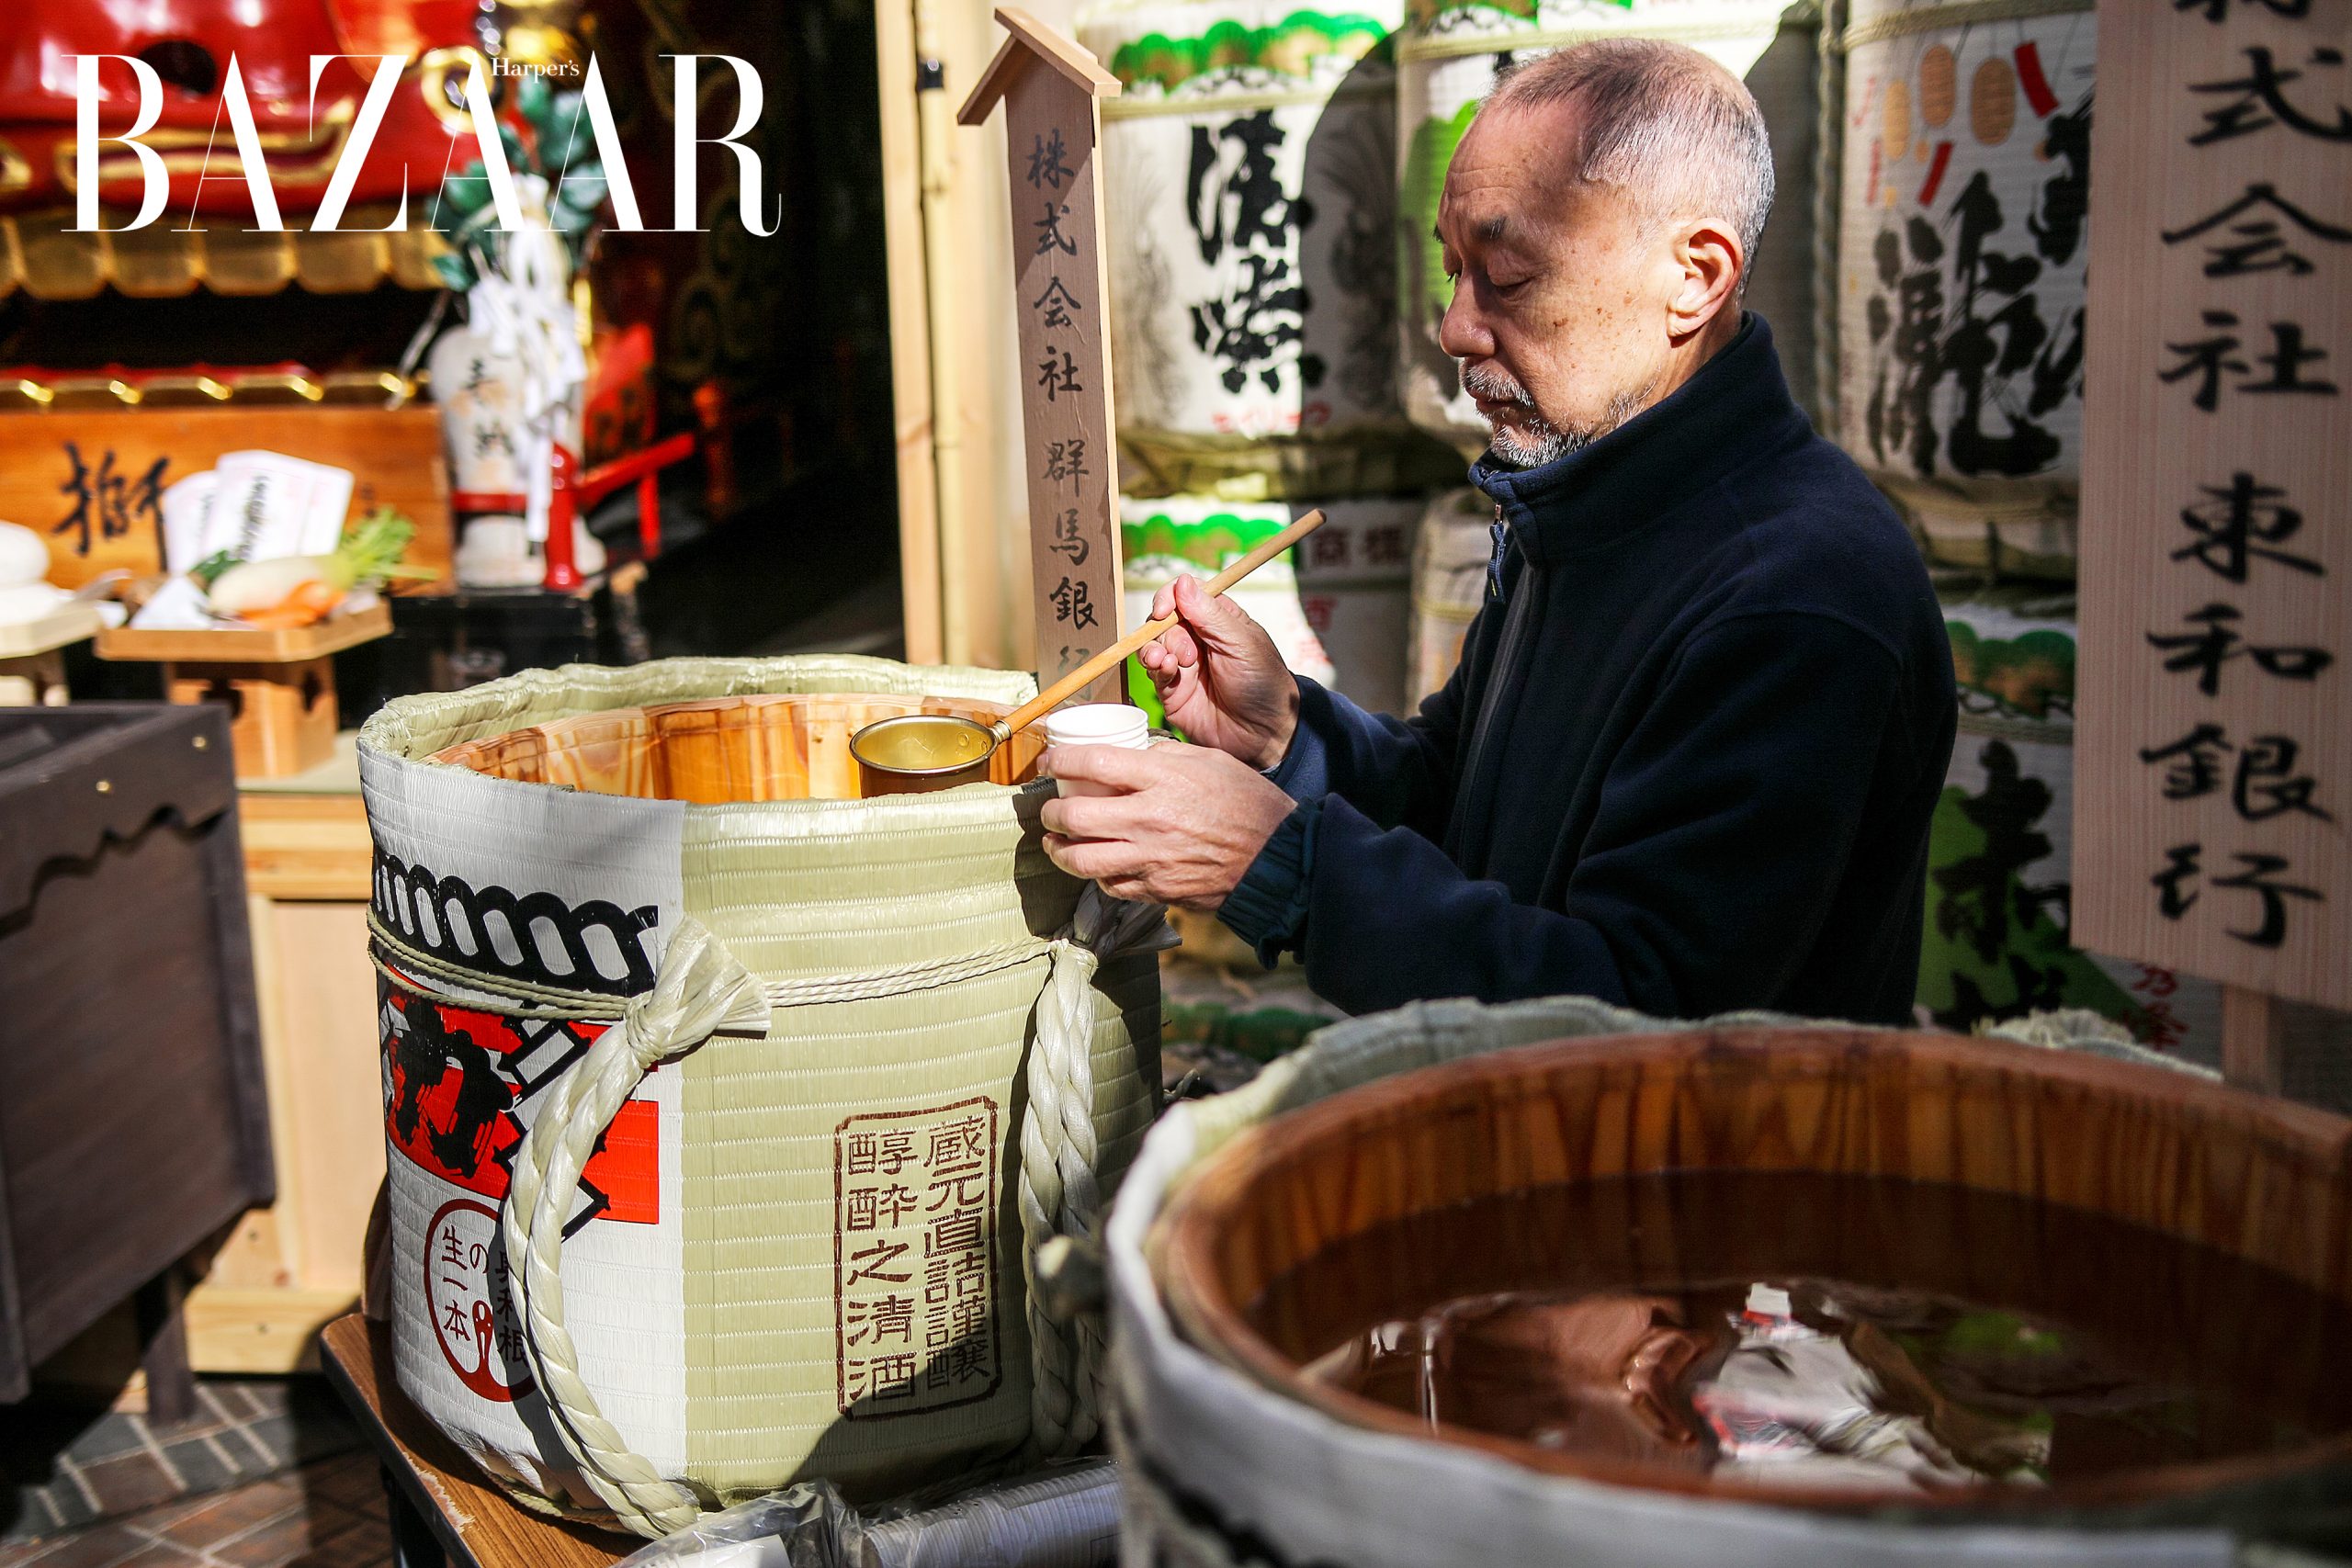 Harper's Bazaar_Văn hóa sake của người Nhật_04